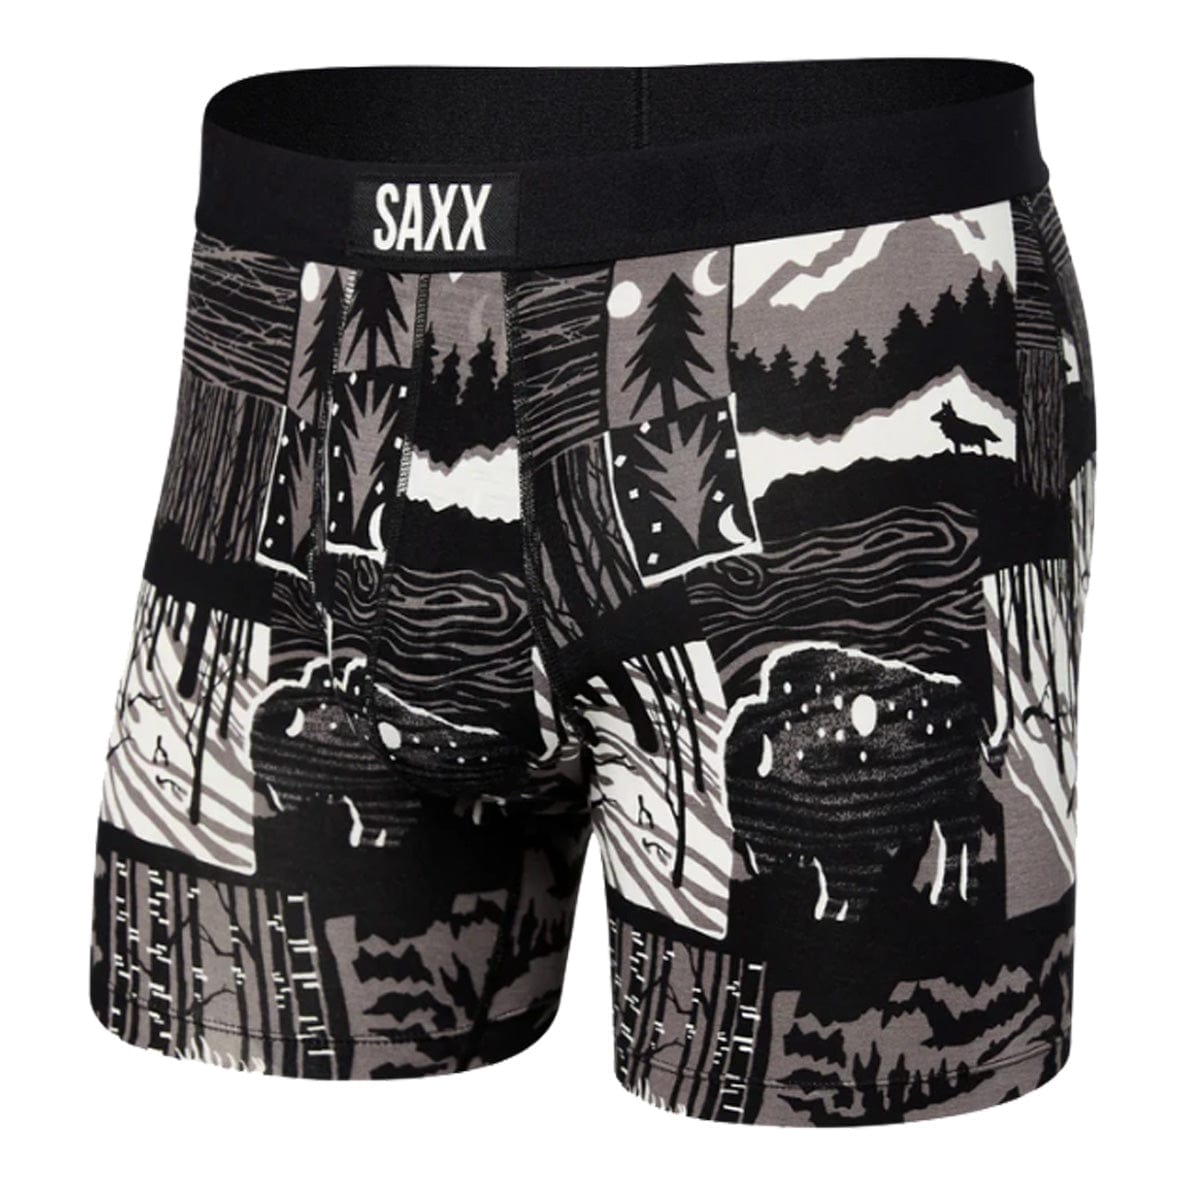 Saxx Vibe Boxers - Winter Shadows